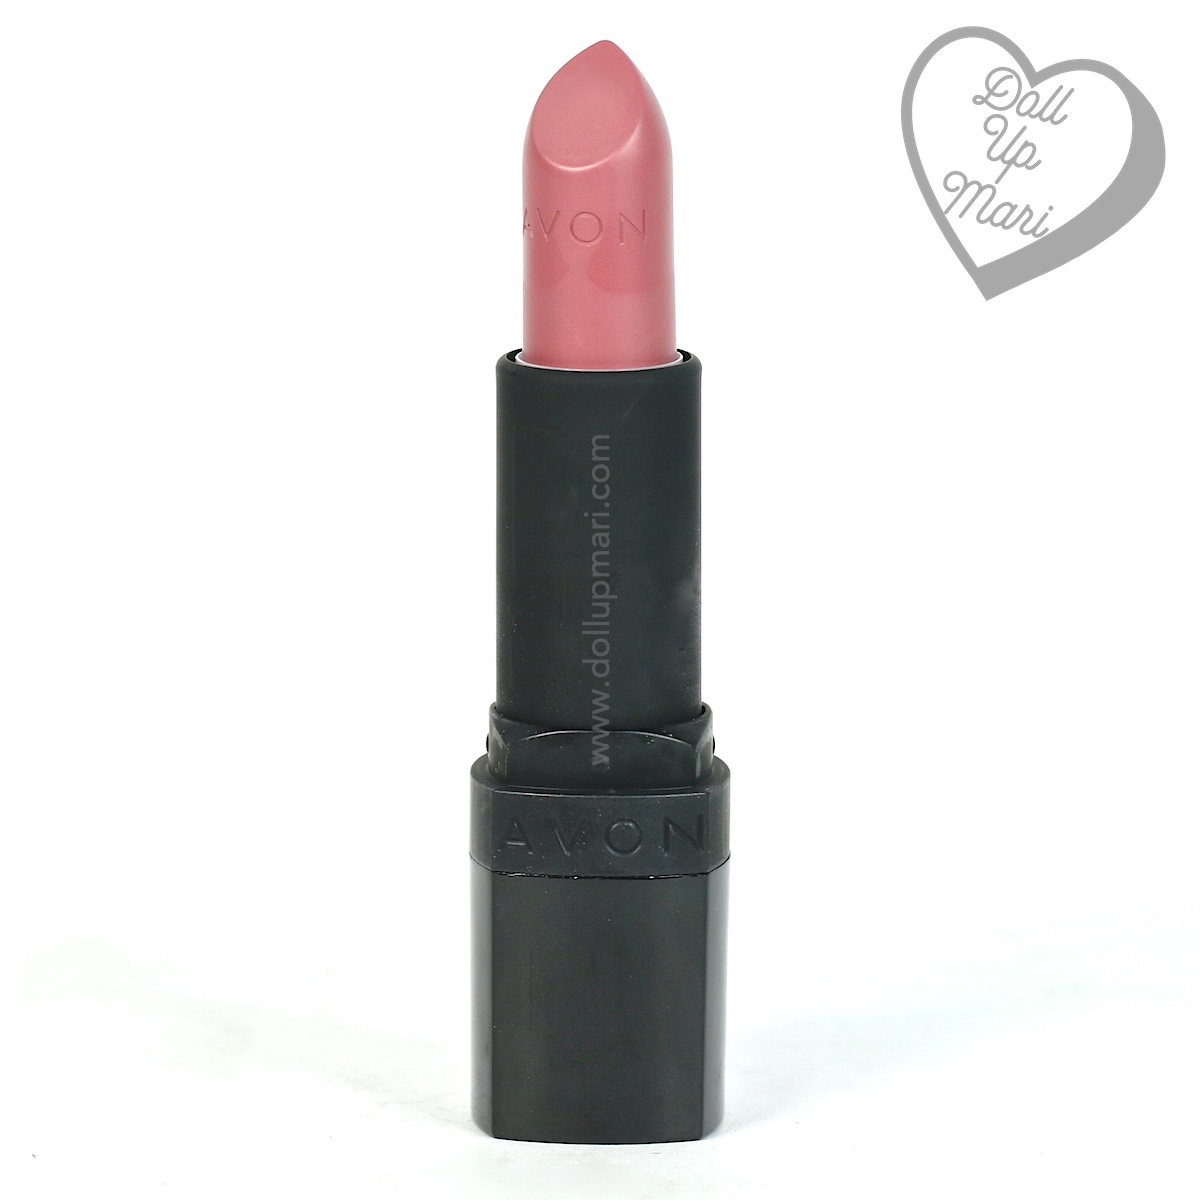 pack shot of Pink Truffle shade of AVON Perfectly Matte Lipstick